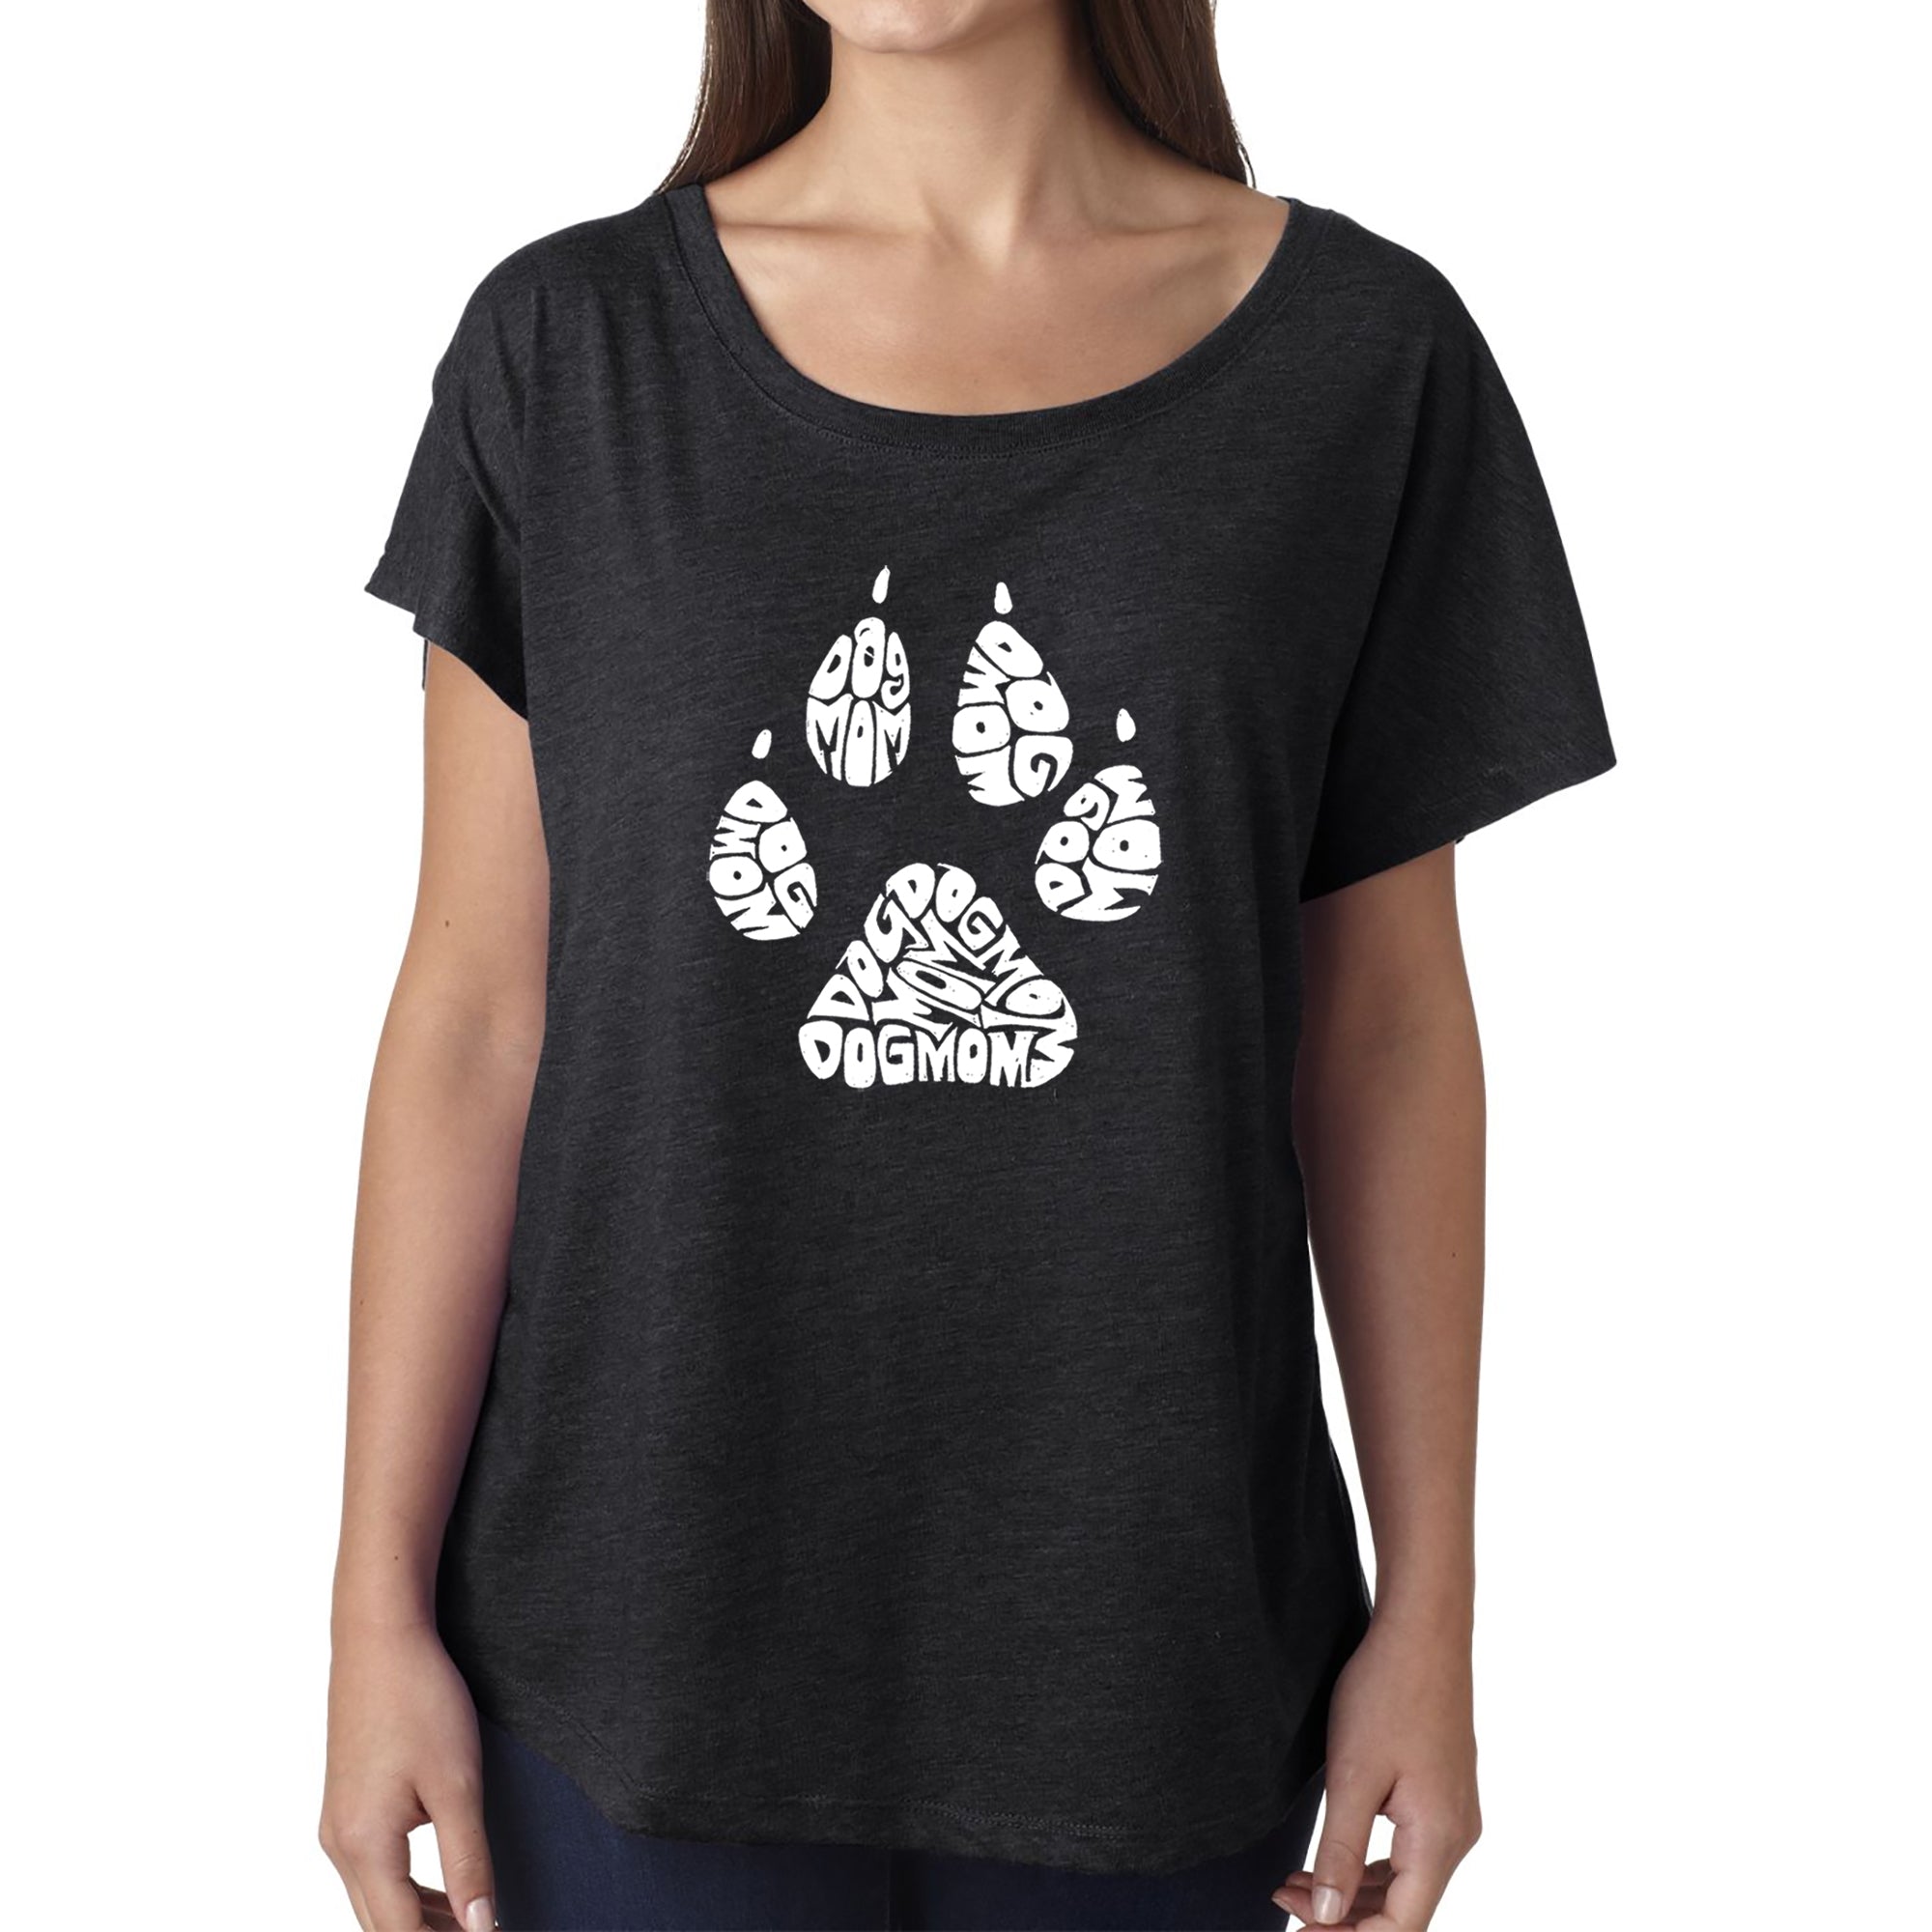 Dog Mom - Women's Loose Fit Dolman Cut Word Art Shirt - Black - Large